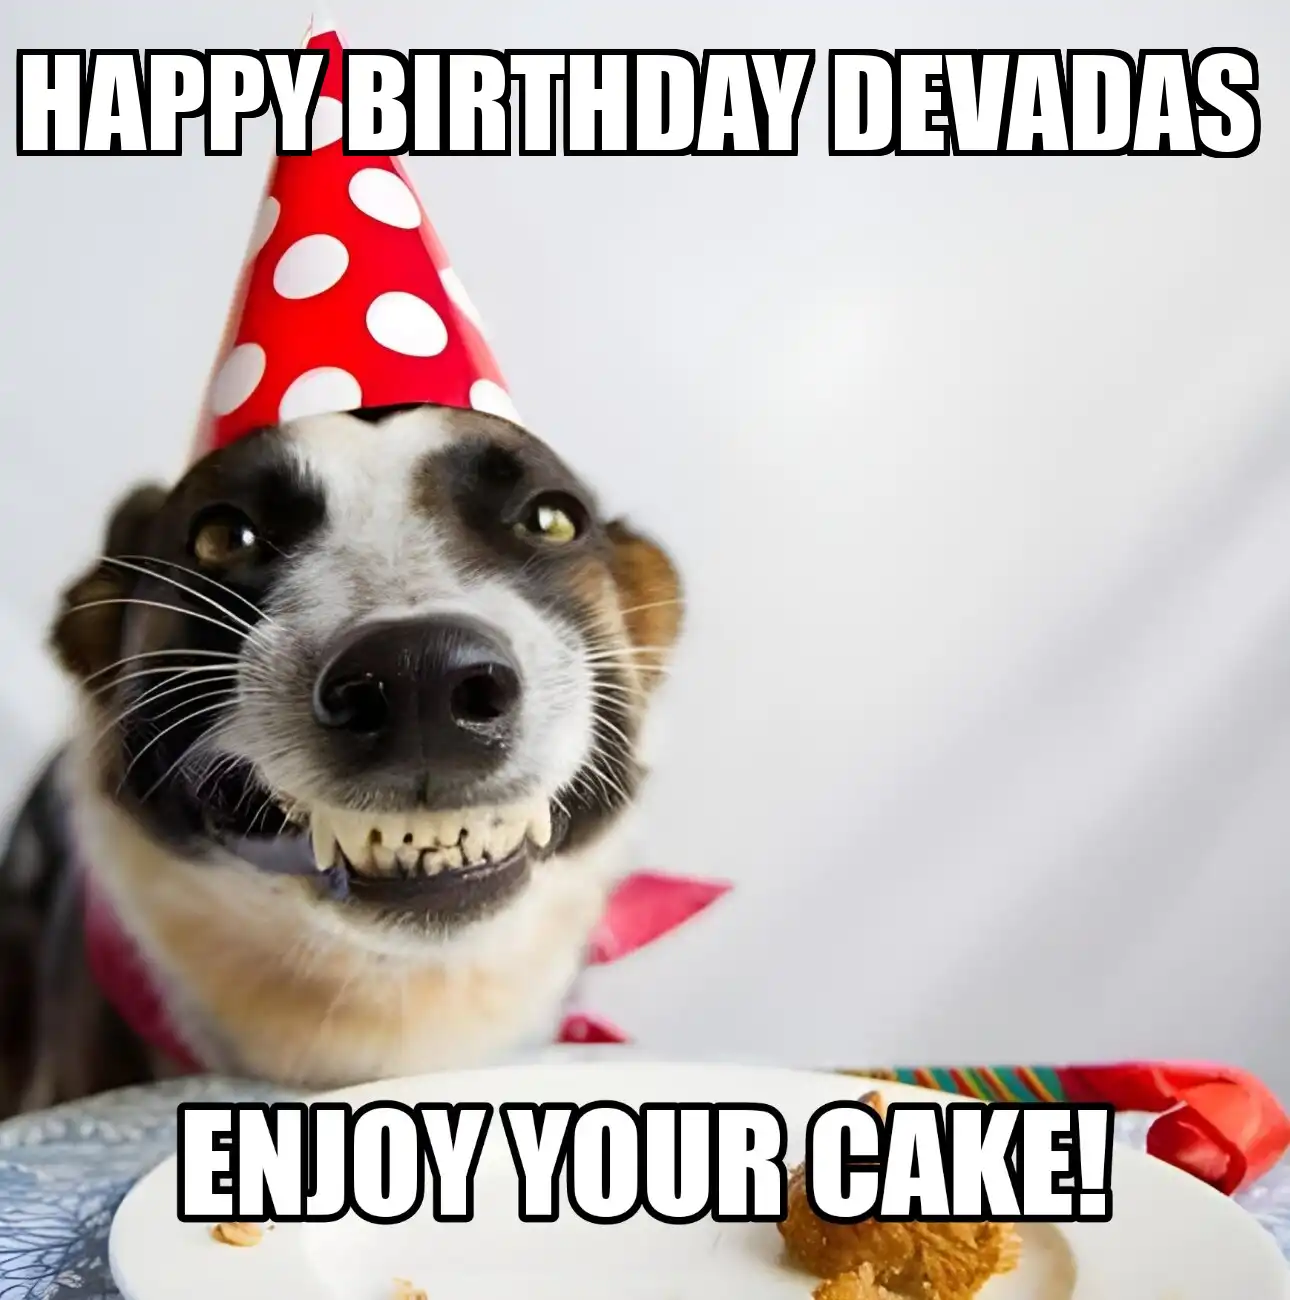 Happy Birthday Devadas Enjoy Your Cake Dog Meme